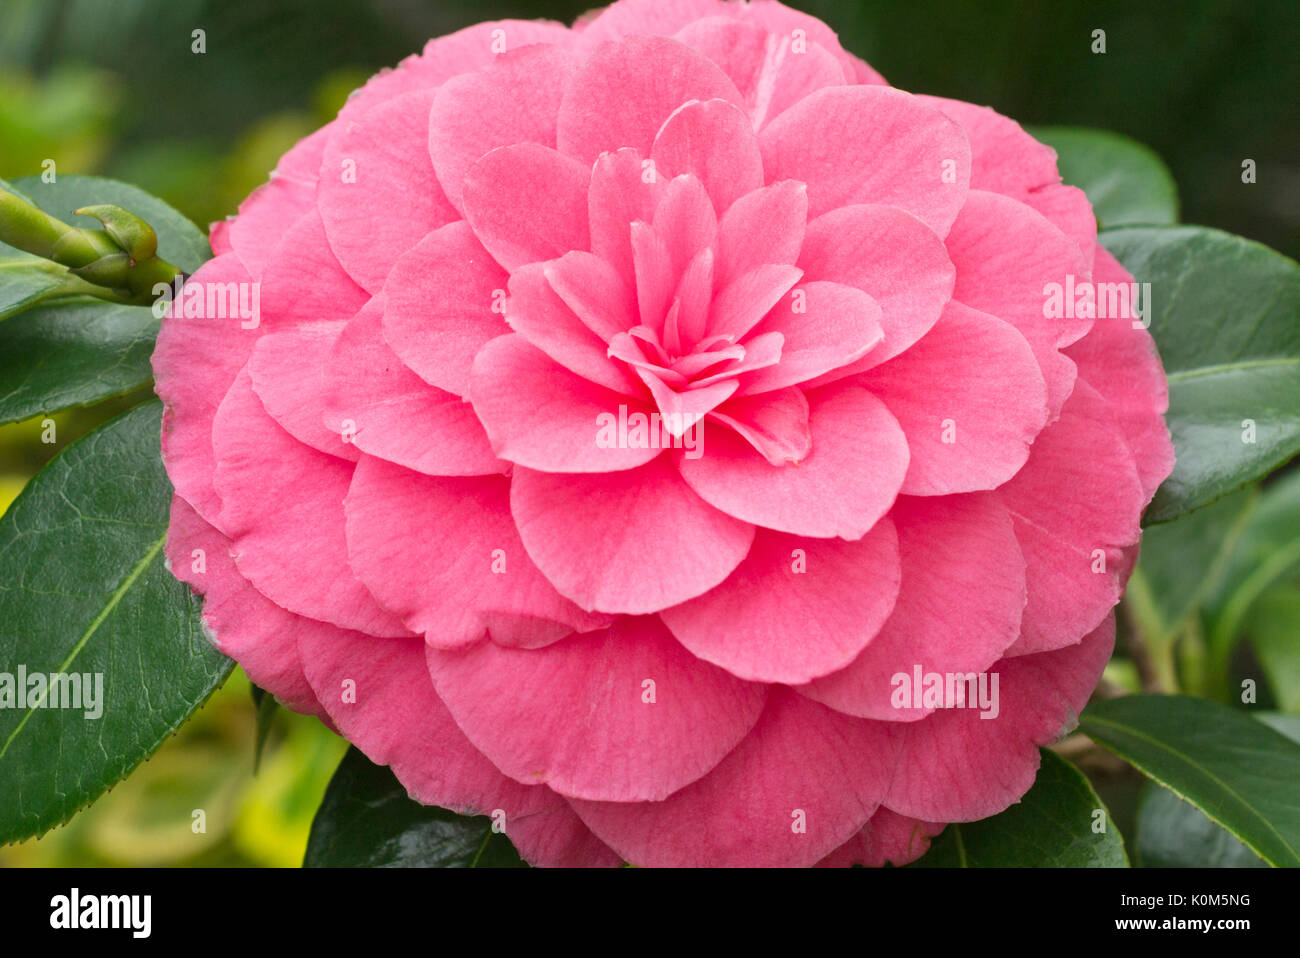 Japanese camellia (Camellia japonica 'General George Patton') Stock Photo